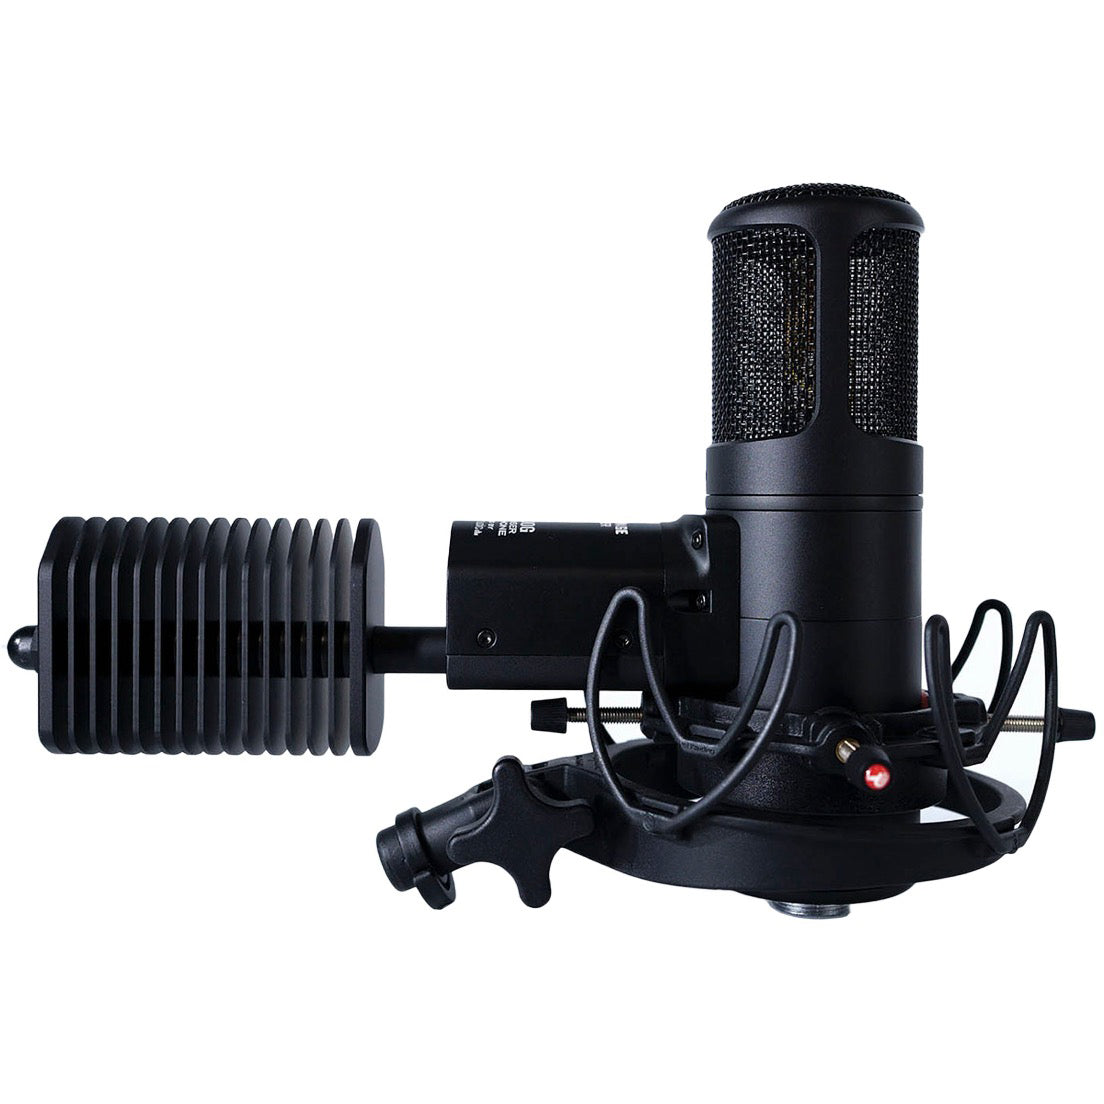 Golden Age Premier GA-8000 Microphone